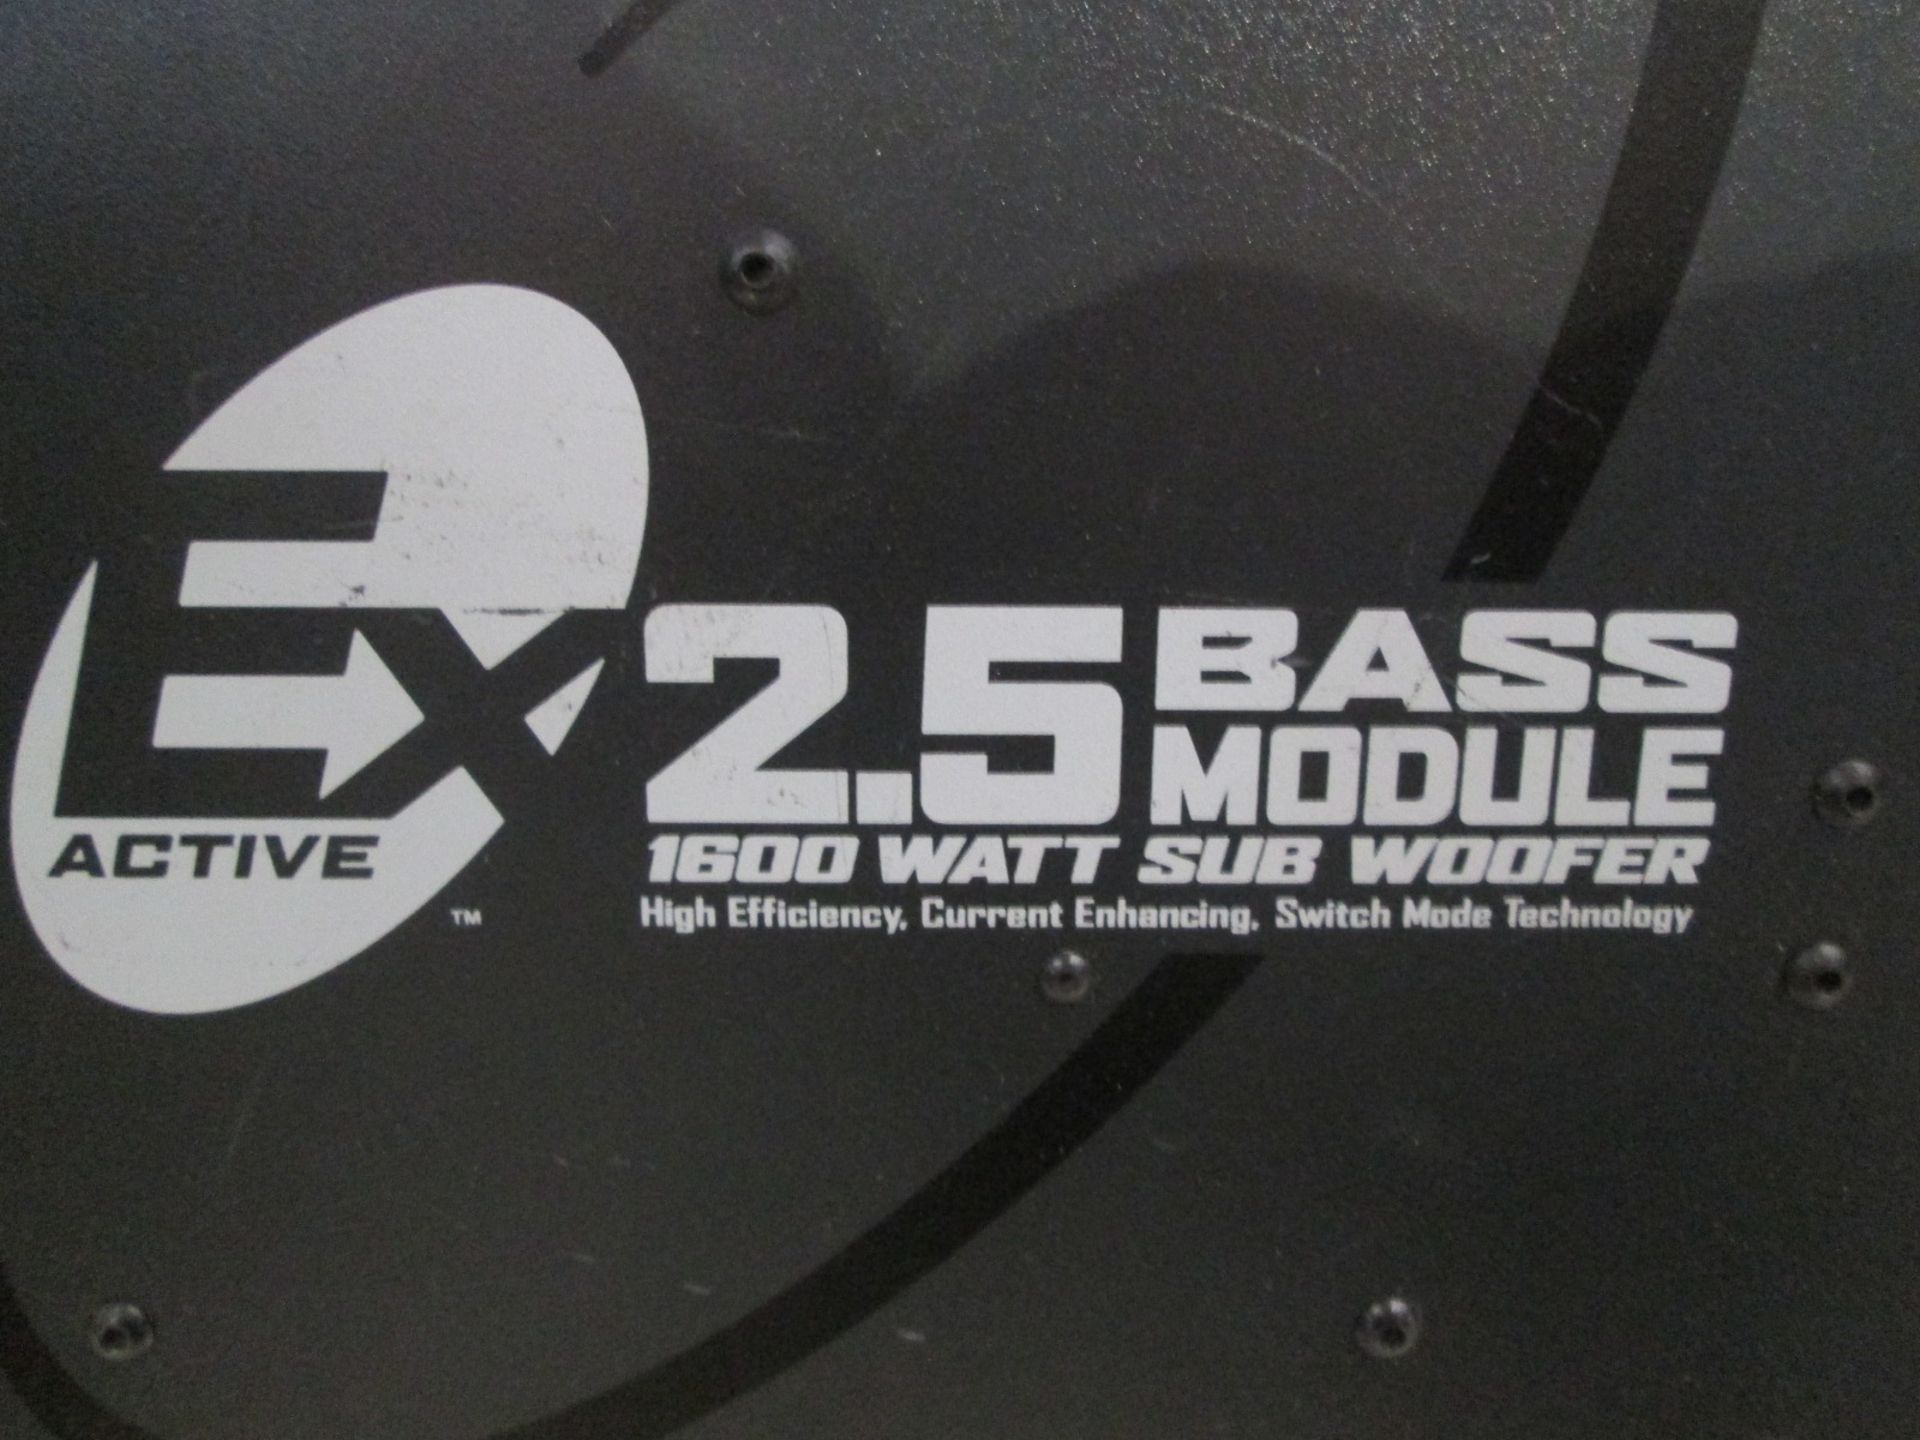 KV2 Audio EX Active 2.5 Bass Module Self Powered 1600 Watt Sub Woofer with KV2 Audio 2.6 bass - Image 6 of 9